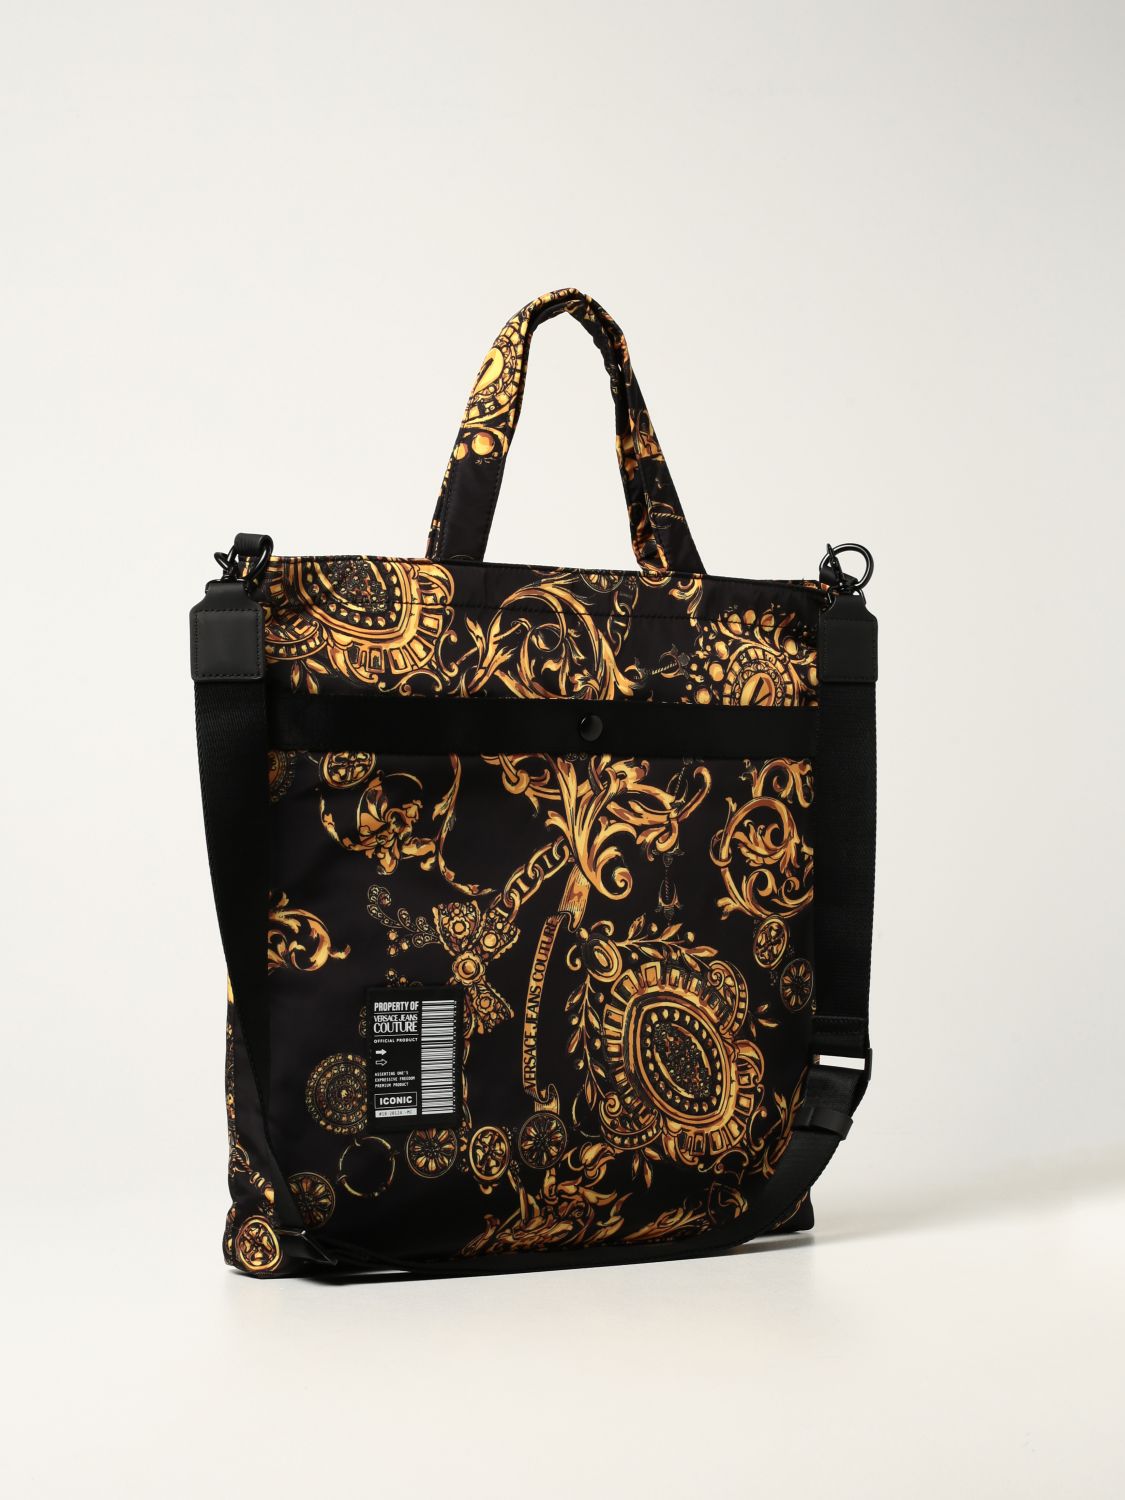 Versace Jeans Couture bag in Regalia Baroque nylon